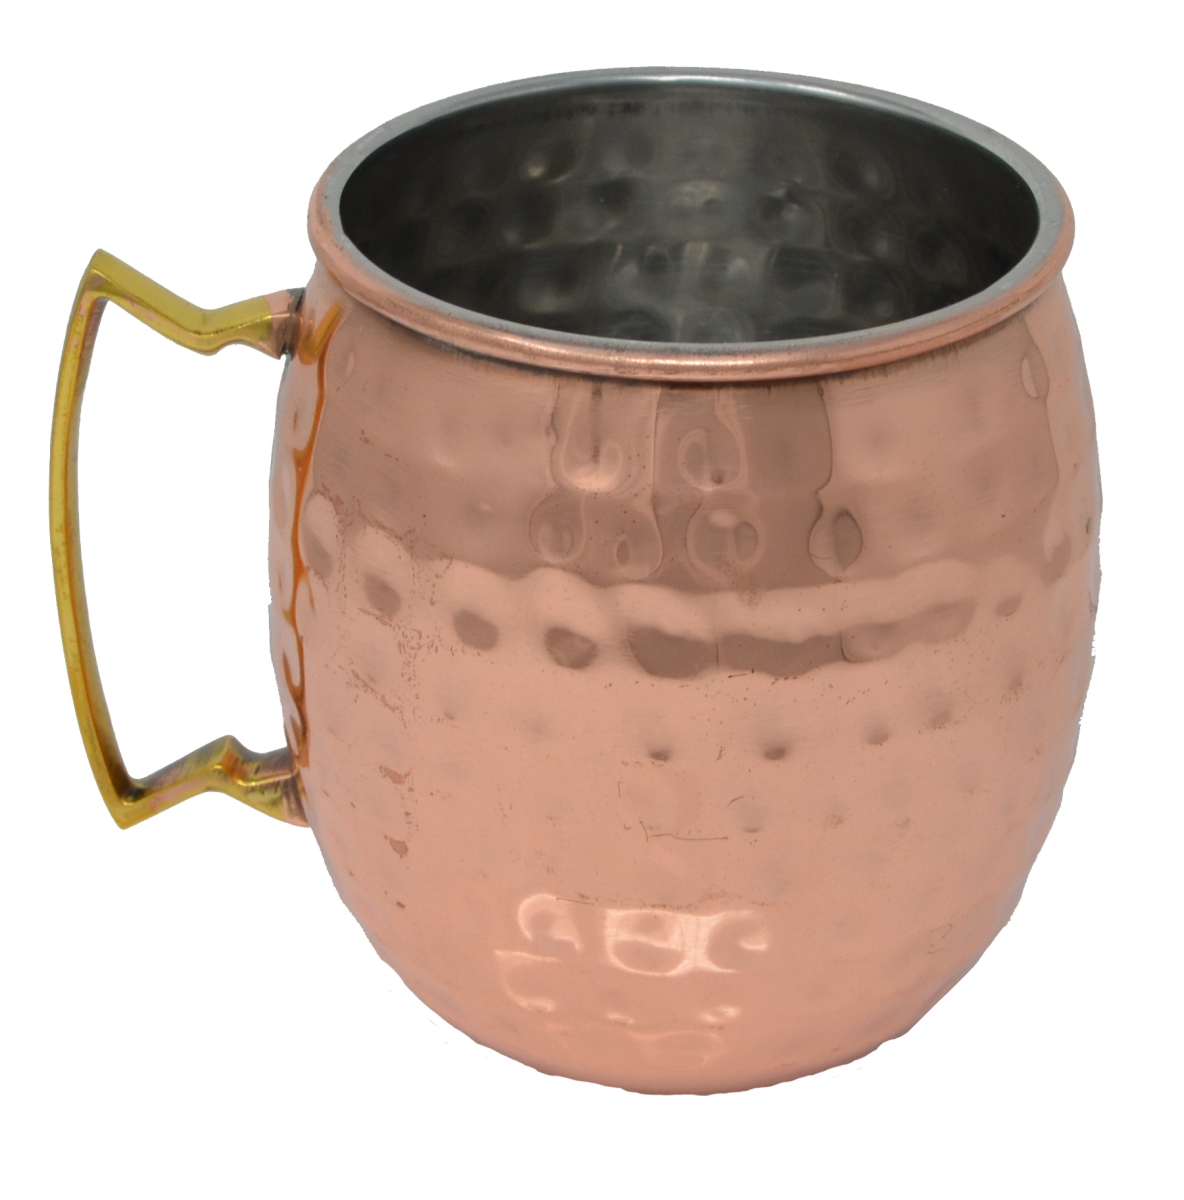 Ac6015 16 Oz Copper Clad Moscow Mule Mug - Hammered